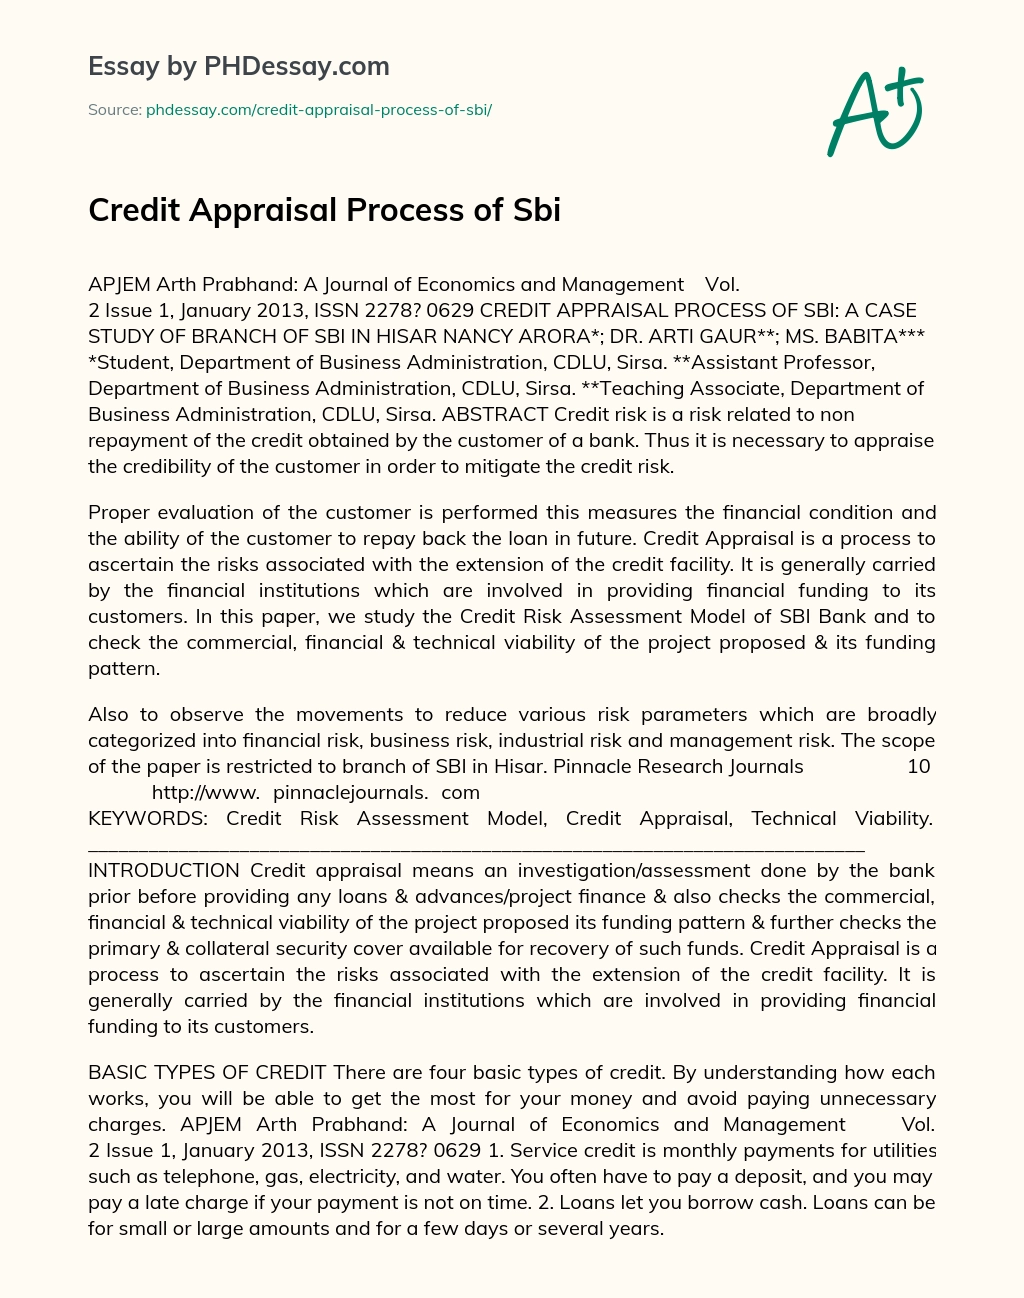 Credit Appraisal Process of Sbi essay